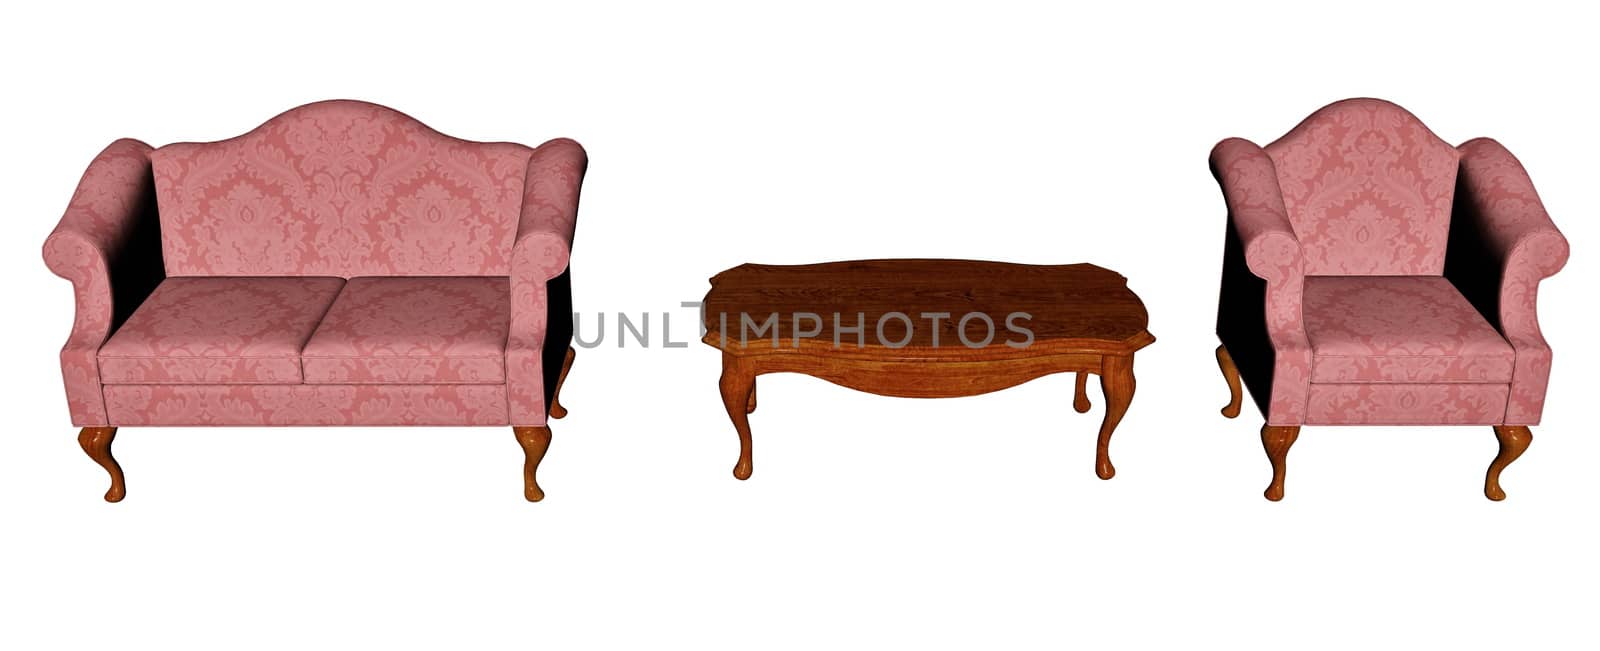 Vintage home furnitures - 3D render by Elenaphotos21